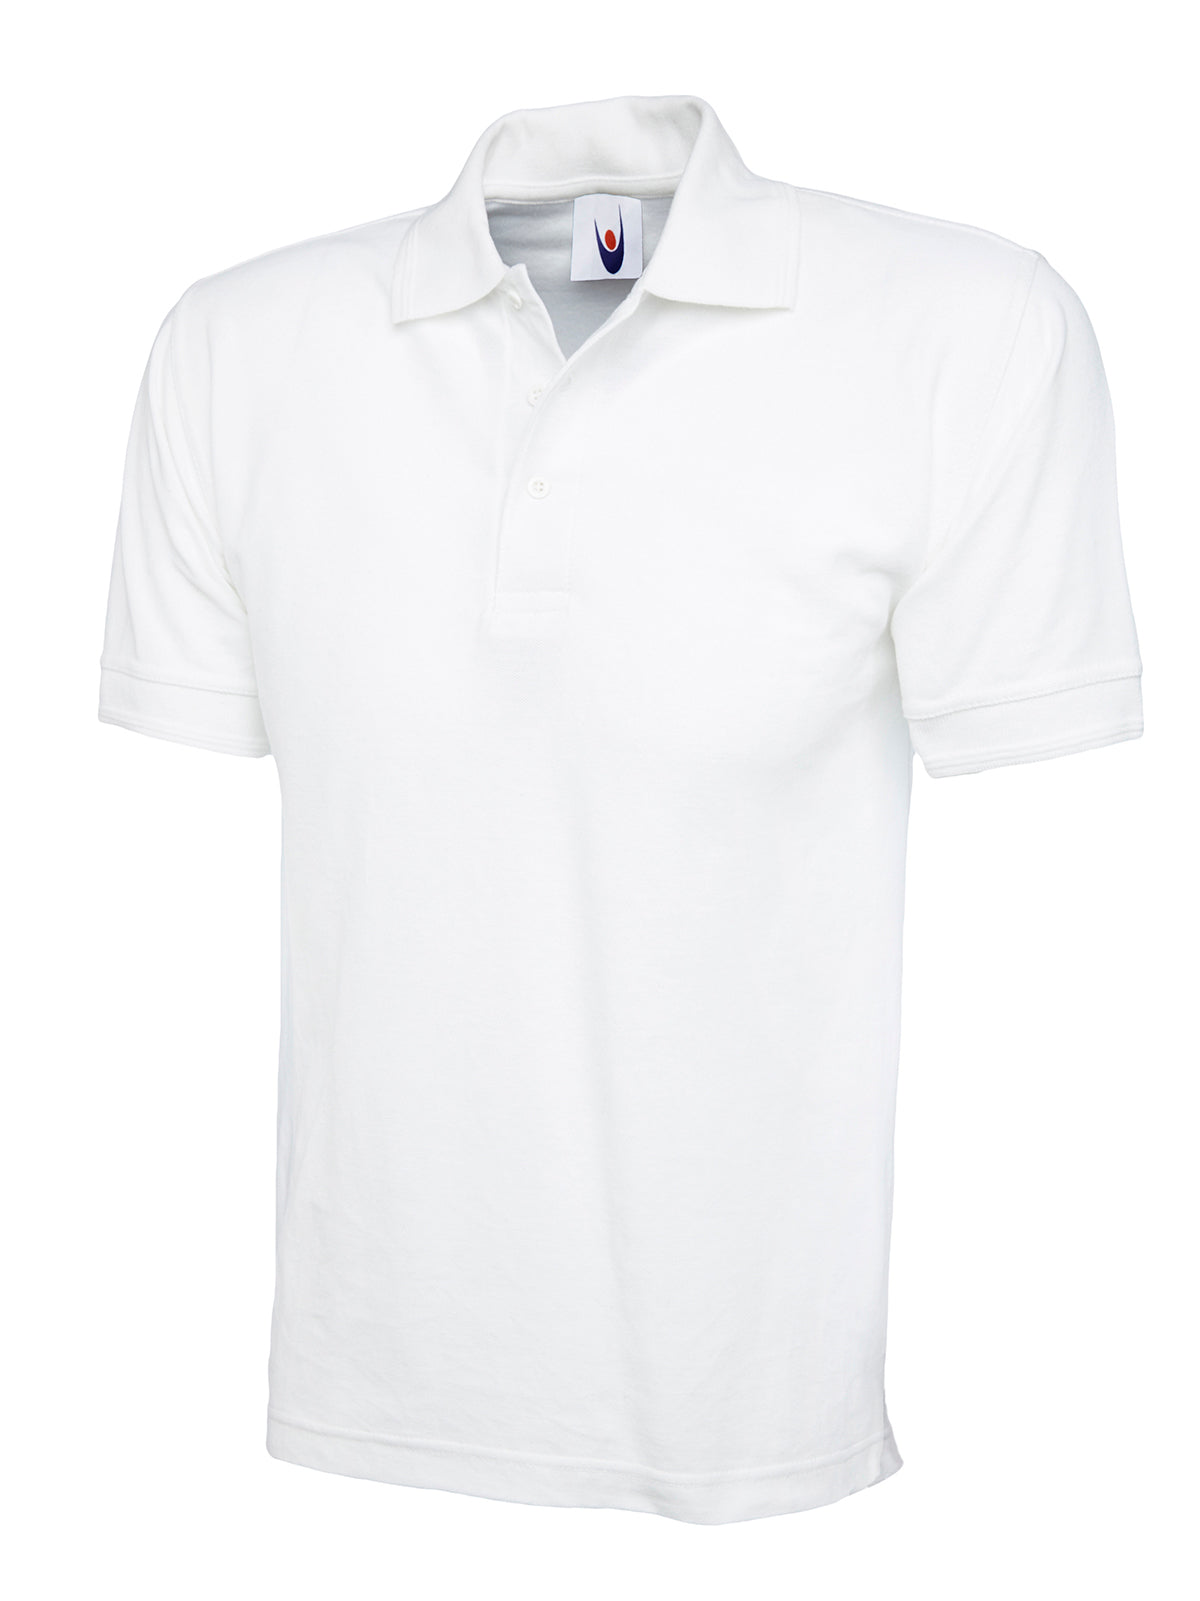 Uneek Premium Unisex Poloshirt UC102 - White